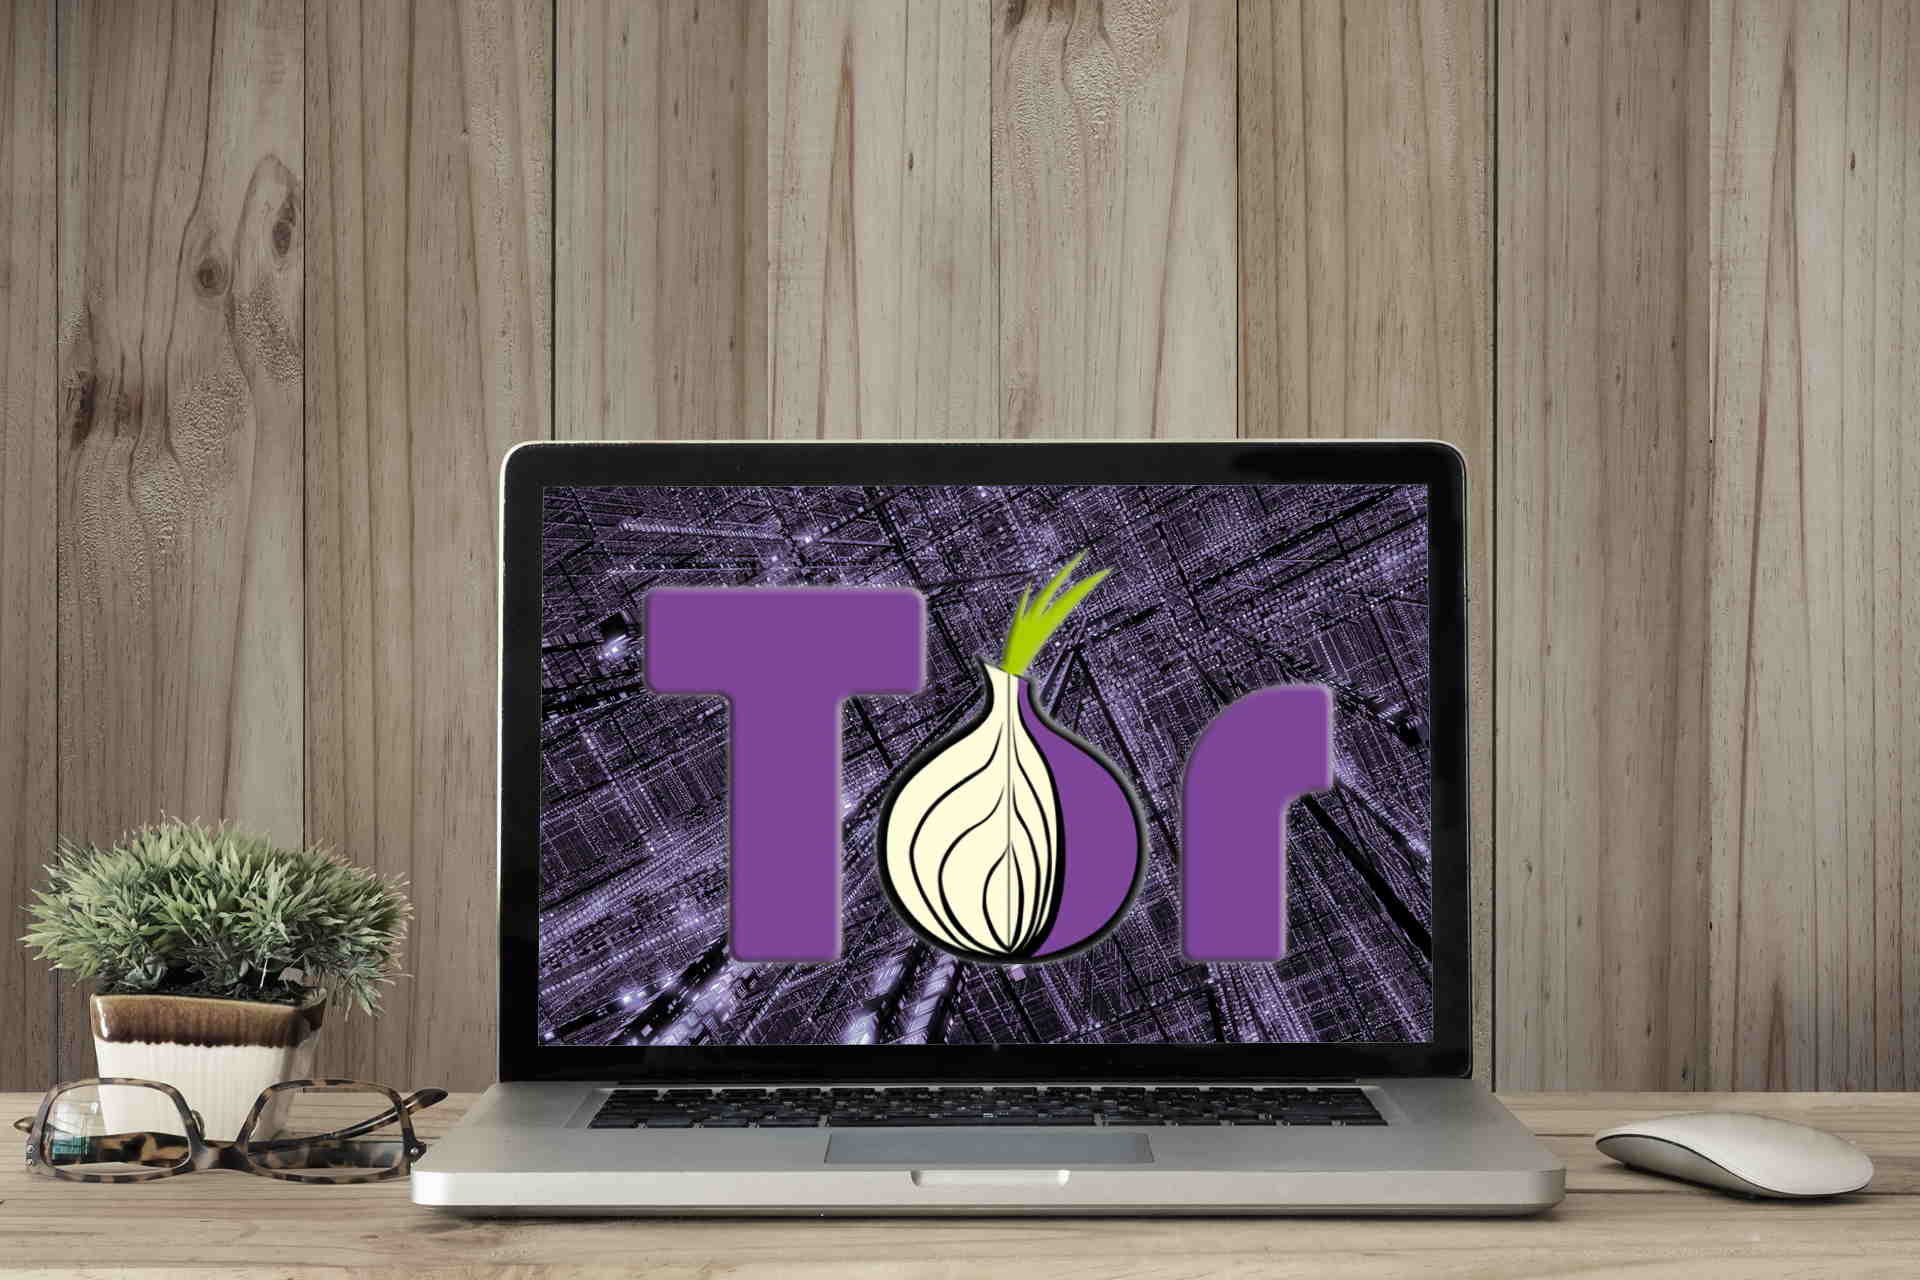 Tor browser is already running but is not responding the old гидра браузер тор как поставить русский язык hydra2web